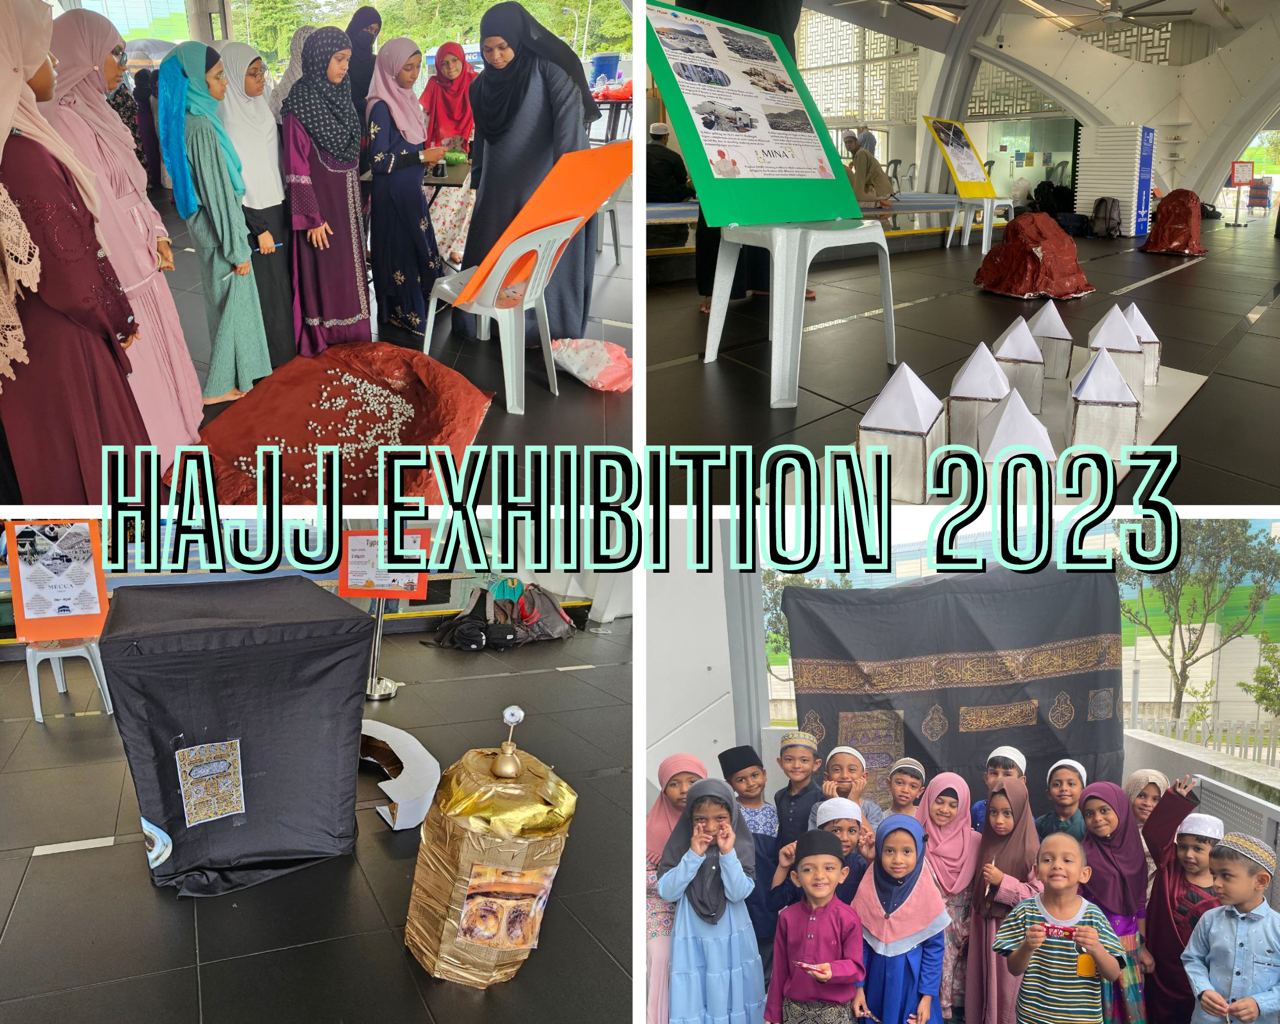 Image for Hajj Exhibition @ Masjid Assyafaah